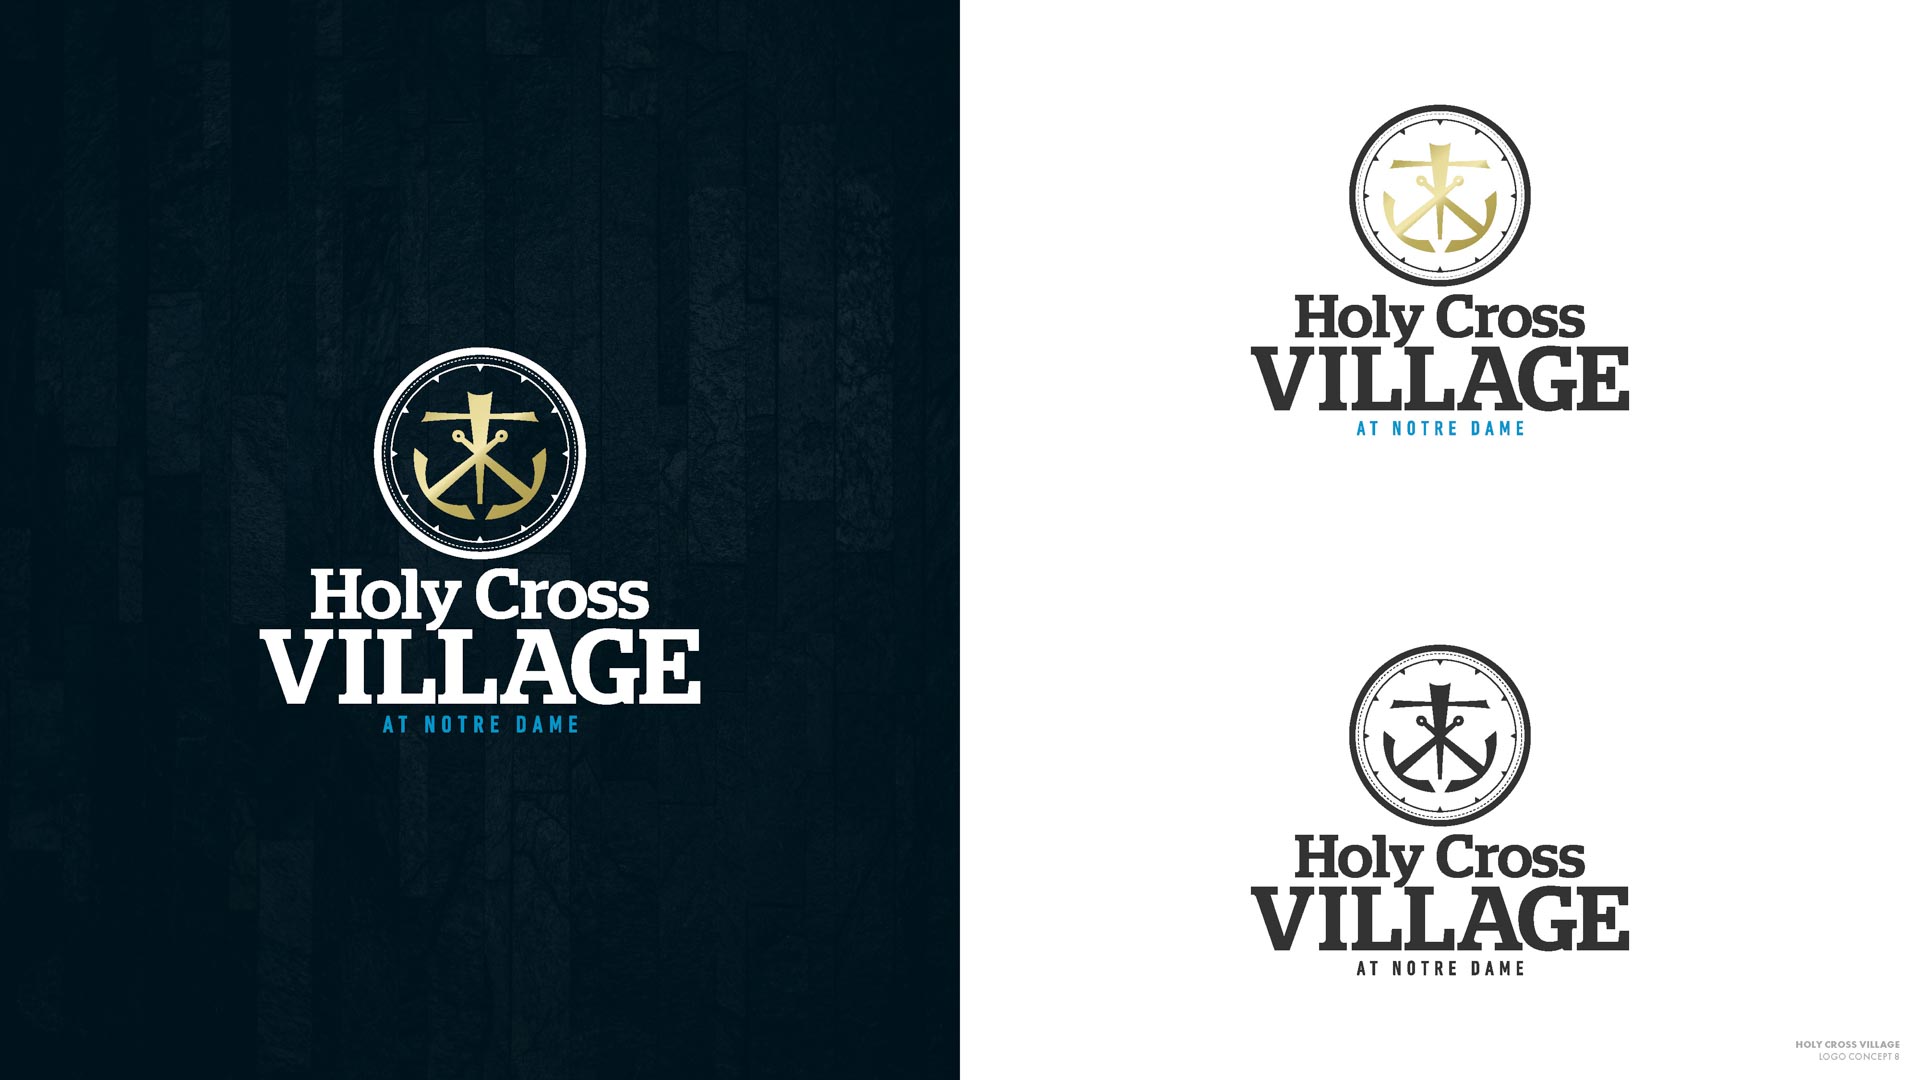 HCV Logo Concepts - Round 1